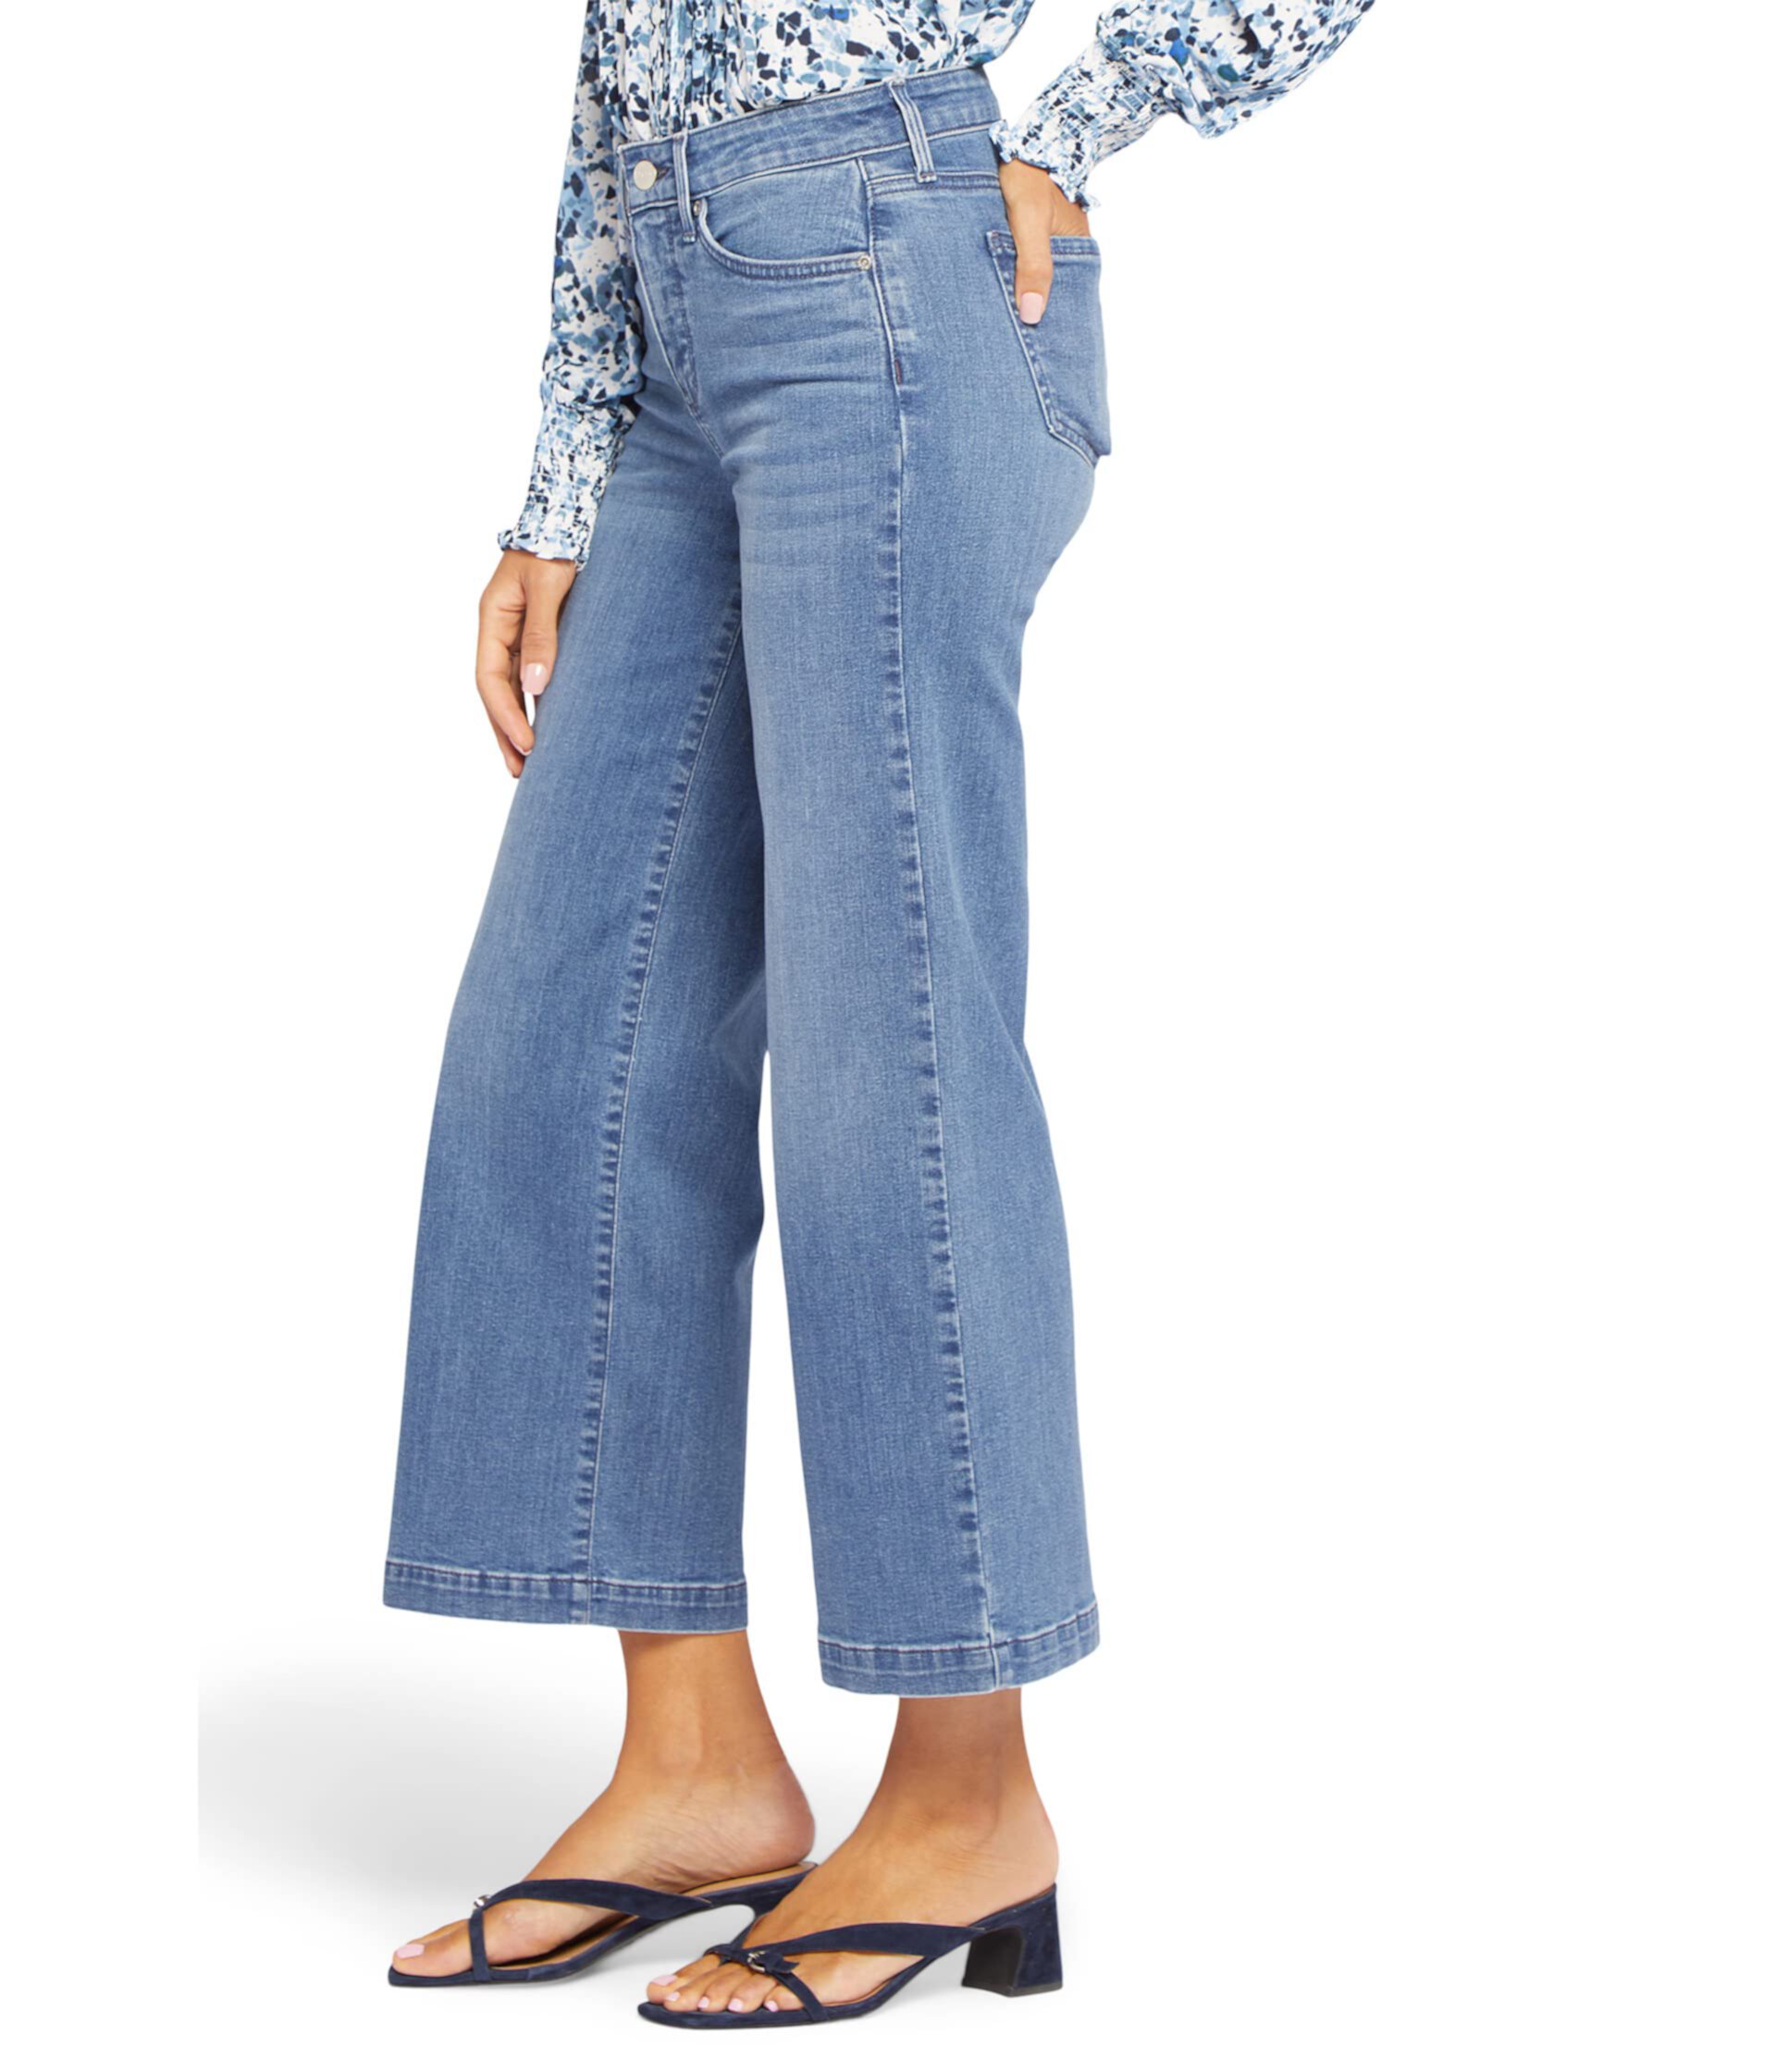 Широкие брюки Teresa до щиколотки 1 дюйм с подолом в цвете Sweetbay NYDJ